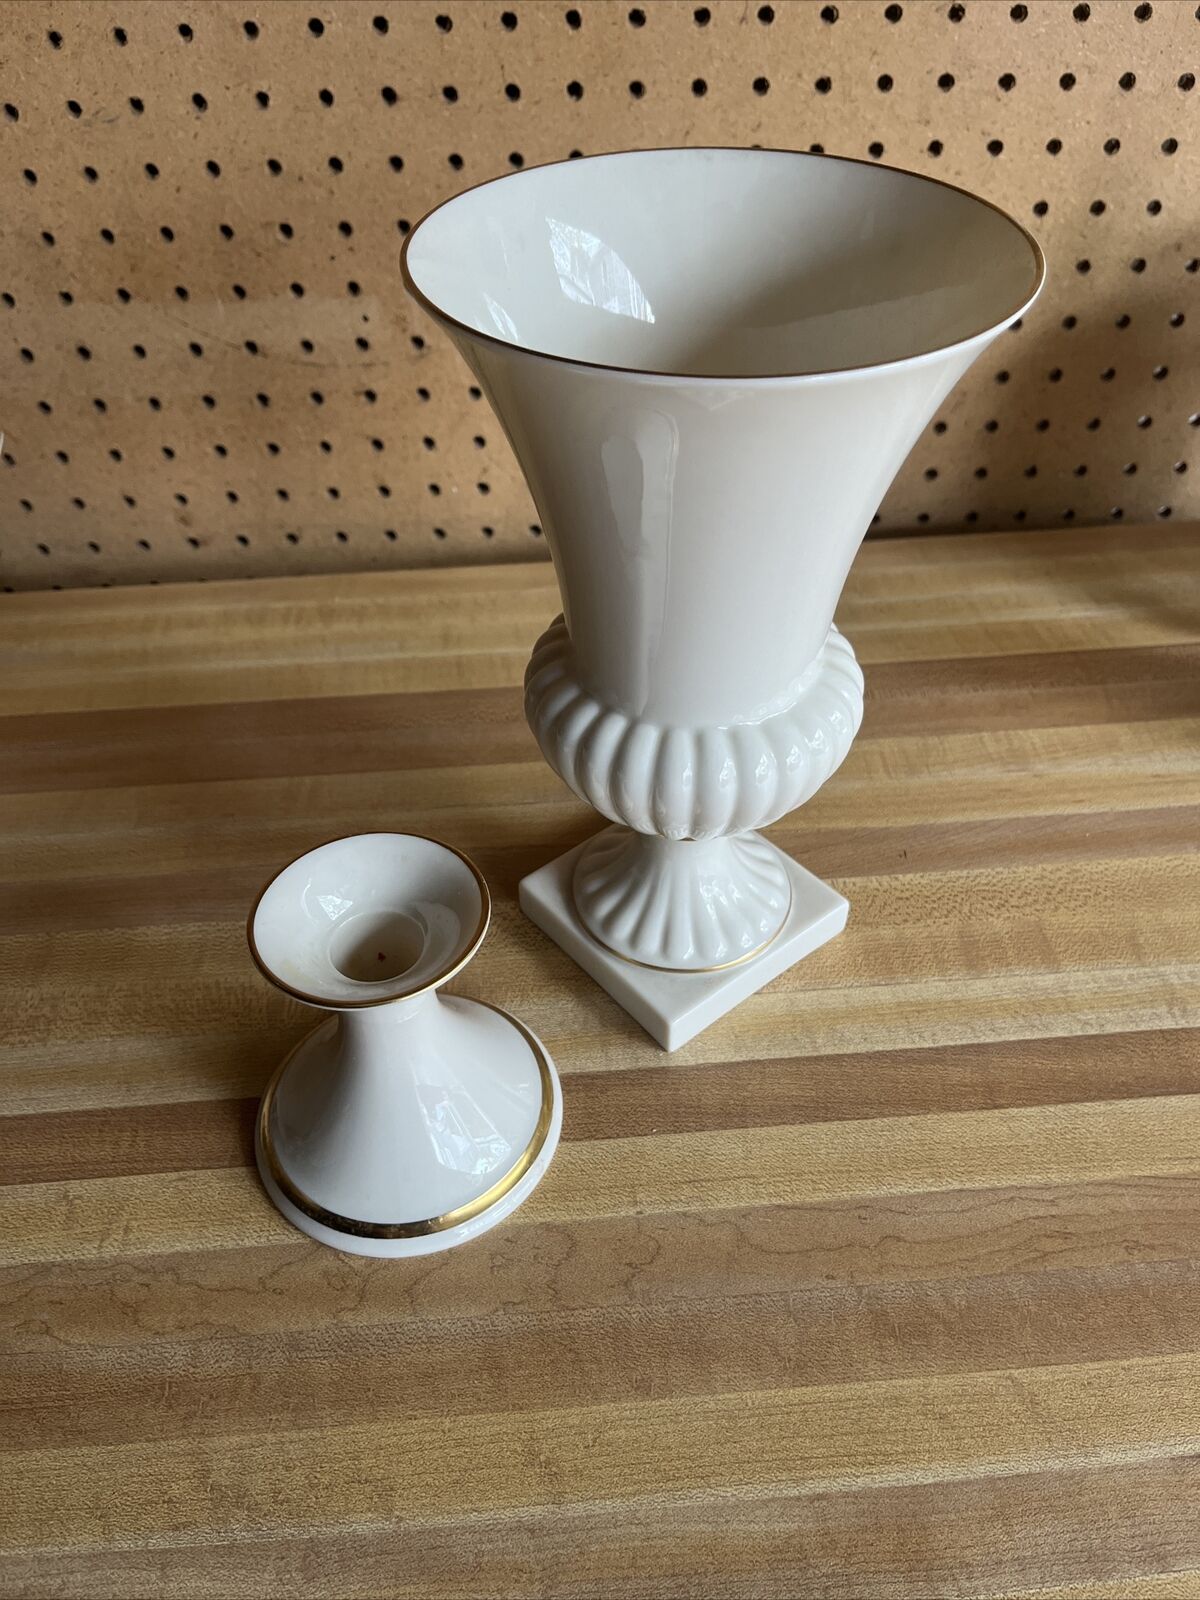 Vintage Lenox Porcelain Trumpet Vase With Gold Trim 91/4” & Small Lenox Vase